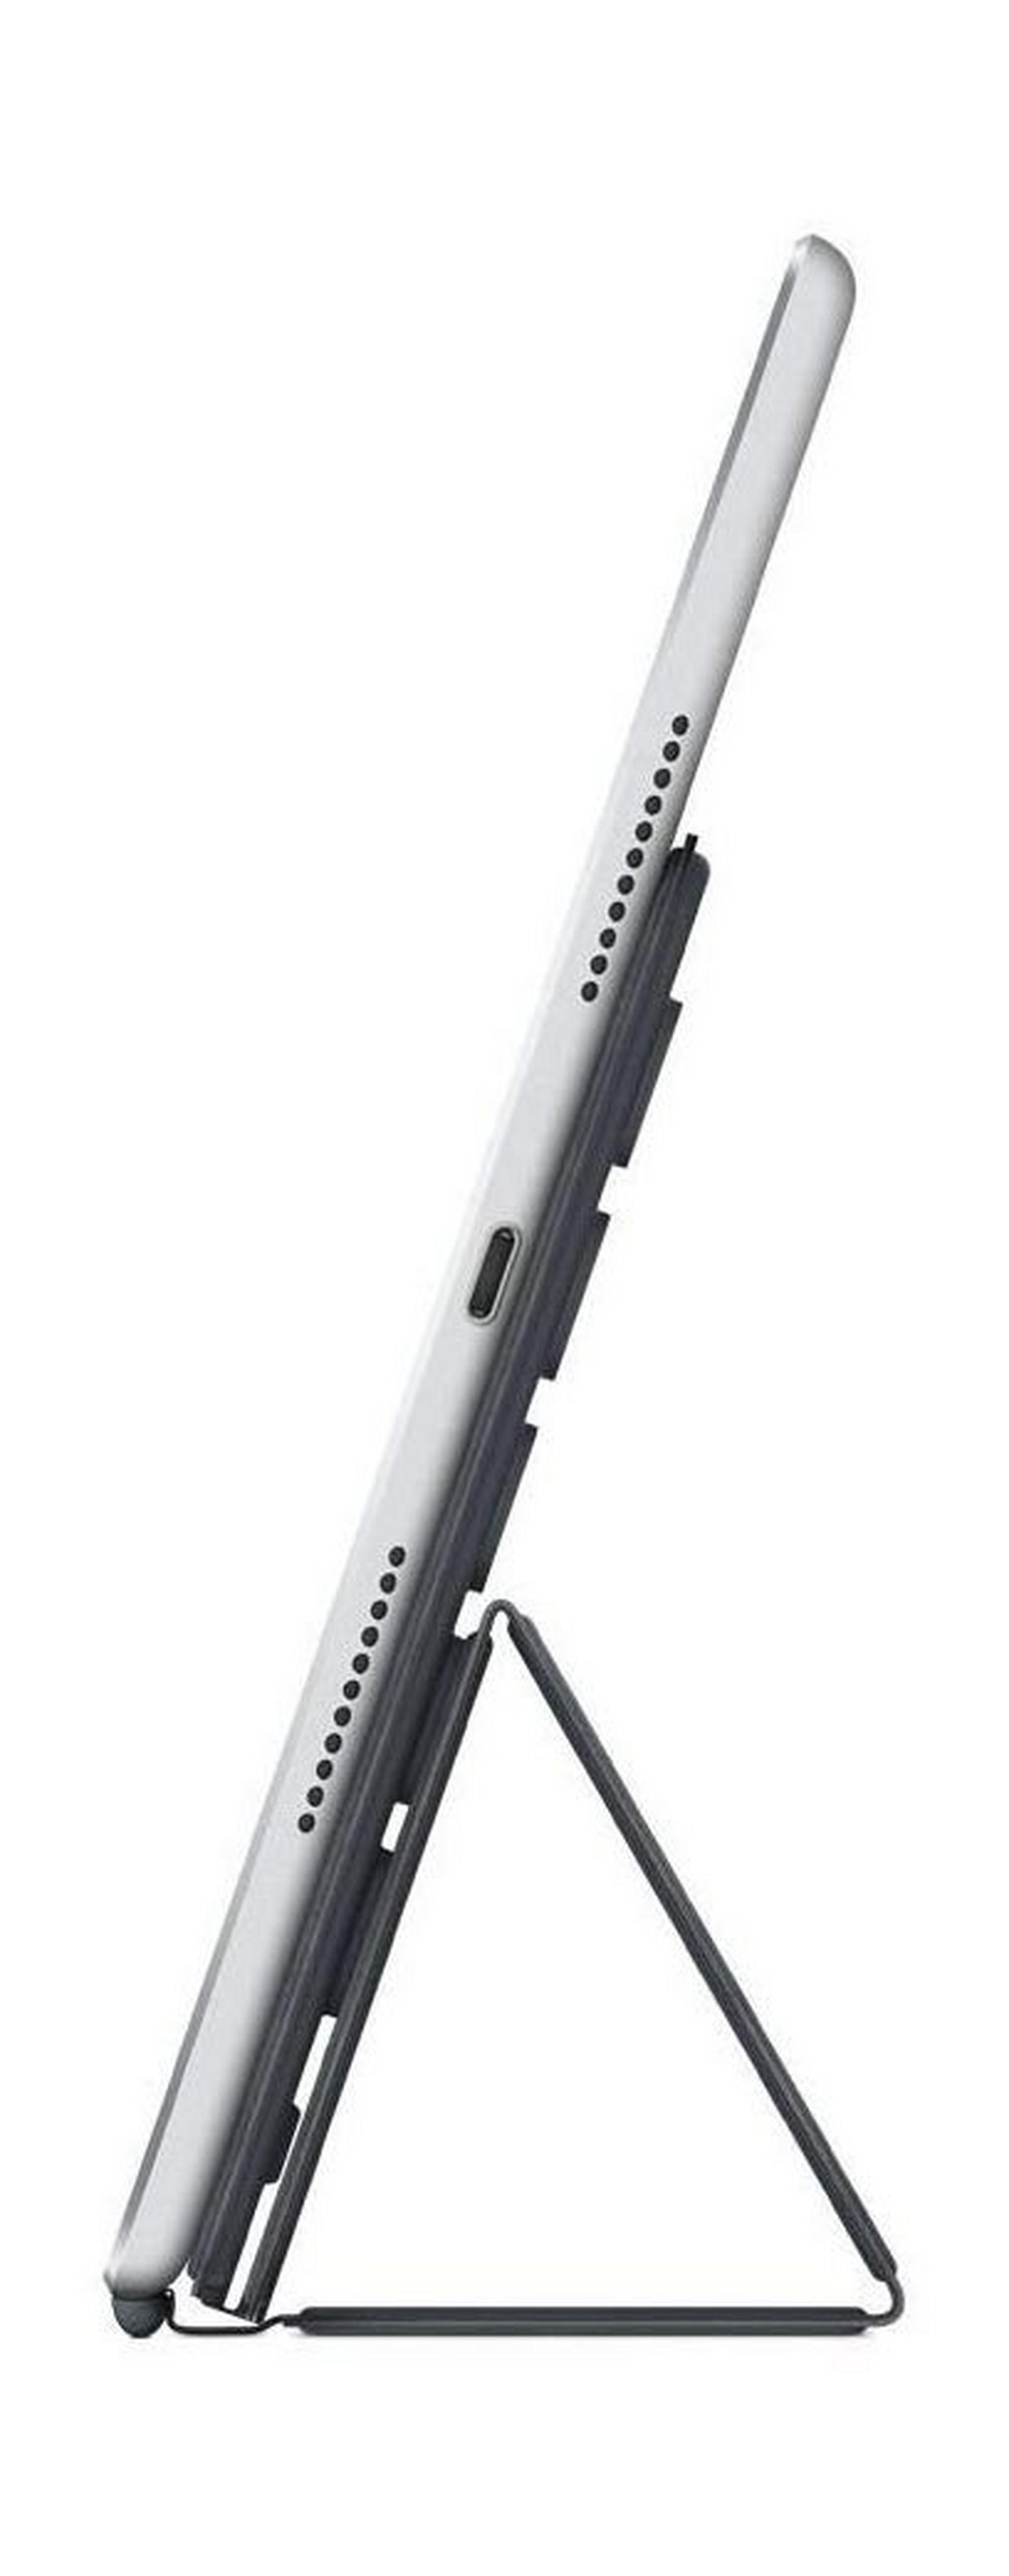 Apple Smart English Keyboard For iPad Pro/Air 10.2-inch (MPTL2LB/A) - Black